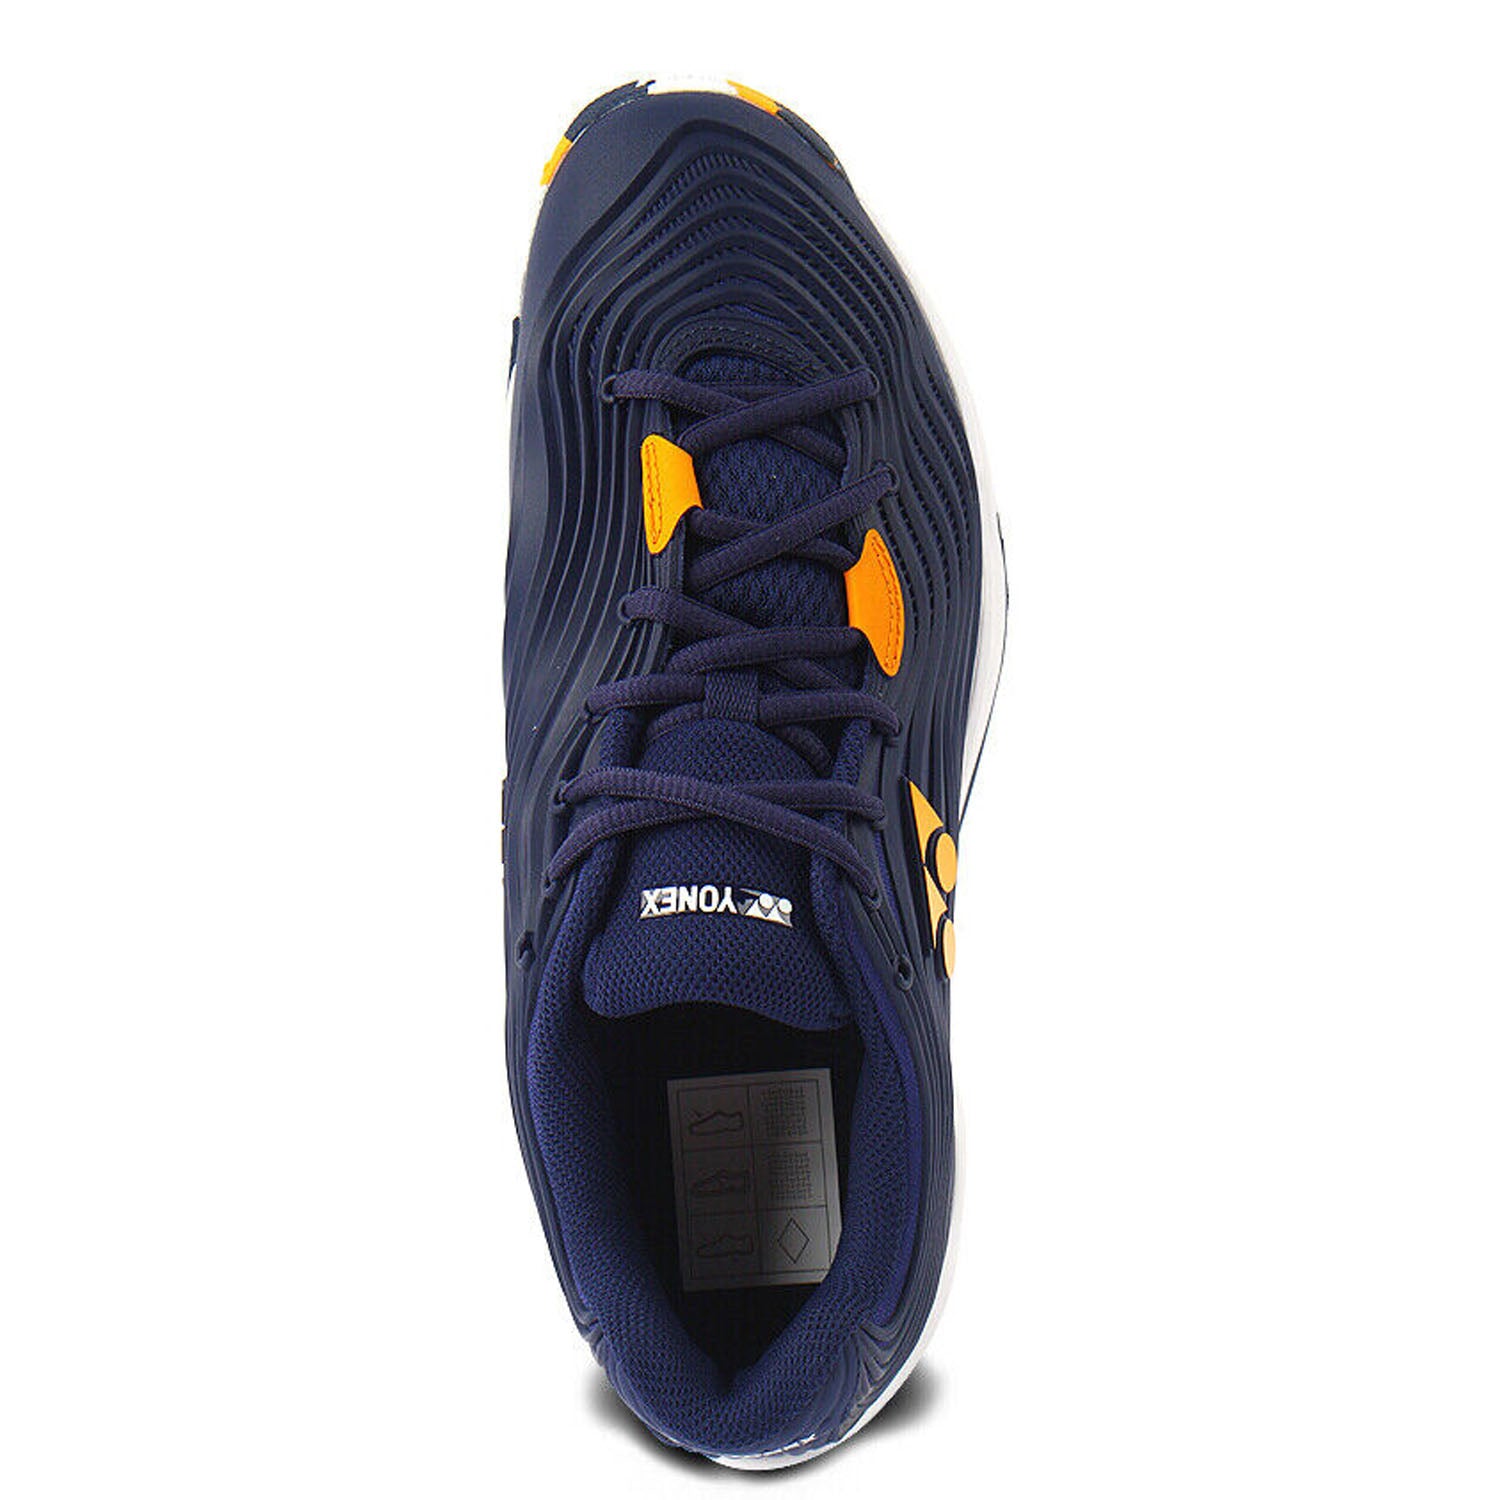 Yonex Power Cushion Fusionrev 5 Clay Tennis Shoe, Navy/Orange - Best Price online Prokicksports.com